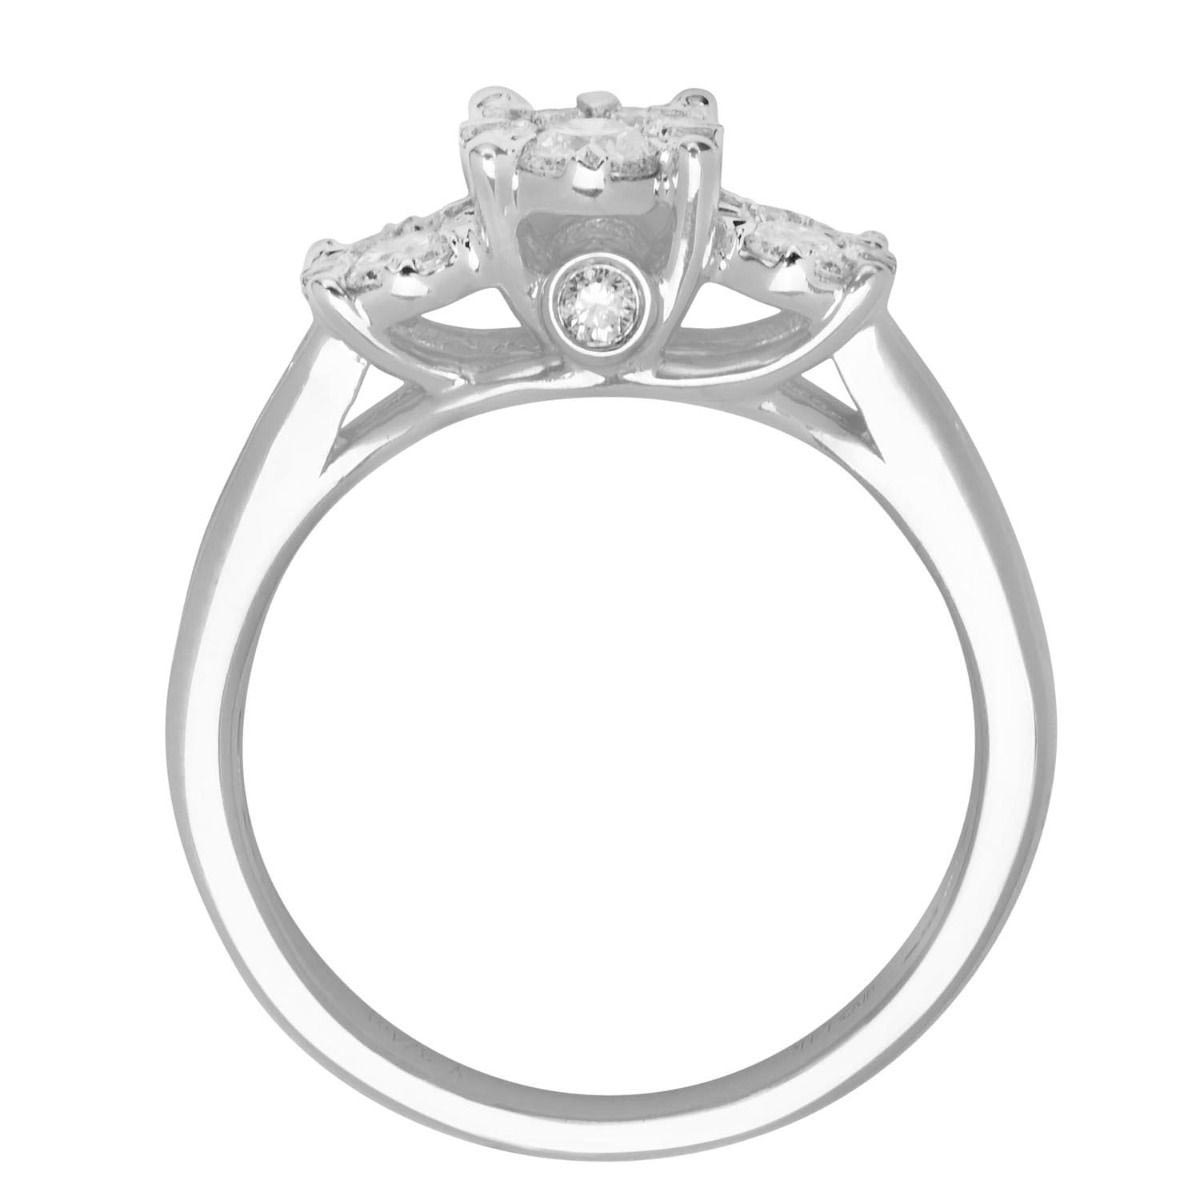 Lovebright Diamond Engagement Ring in 14kt White Gold (3/4ct tw)